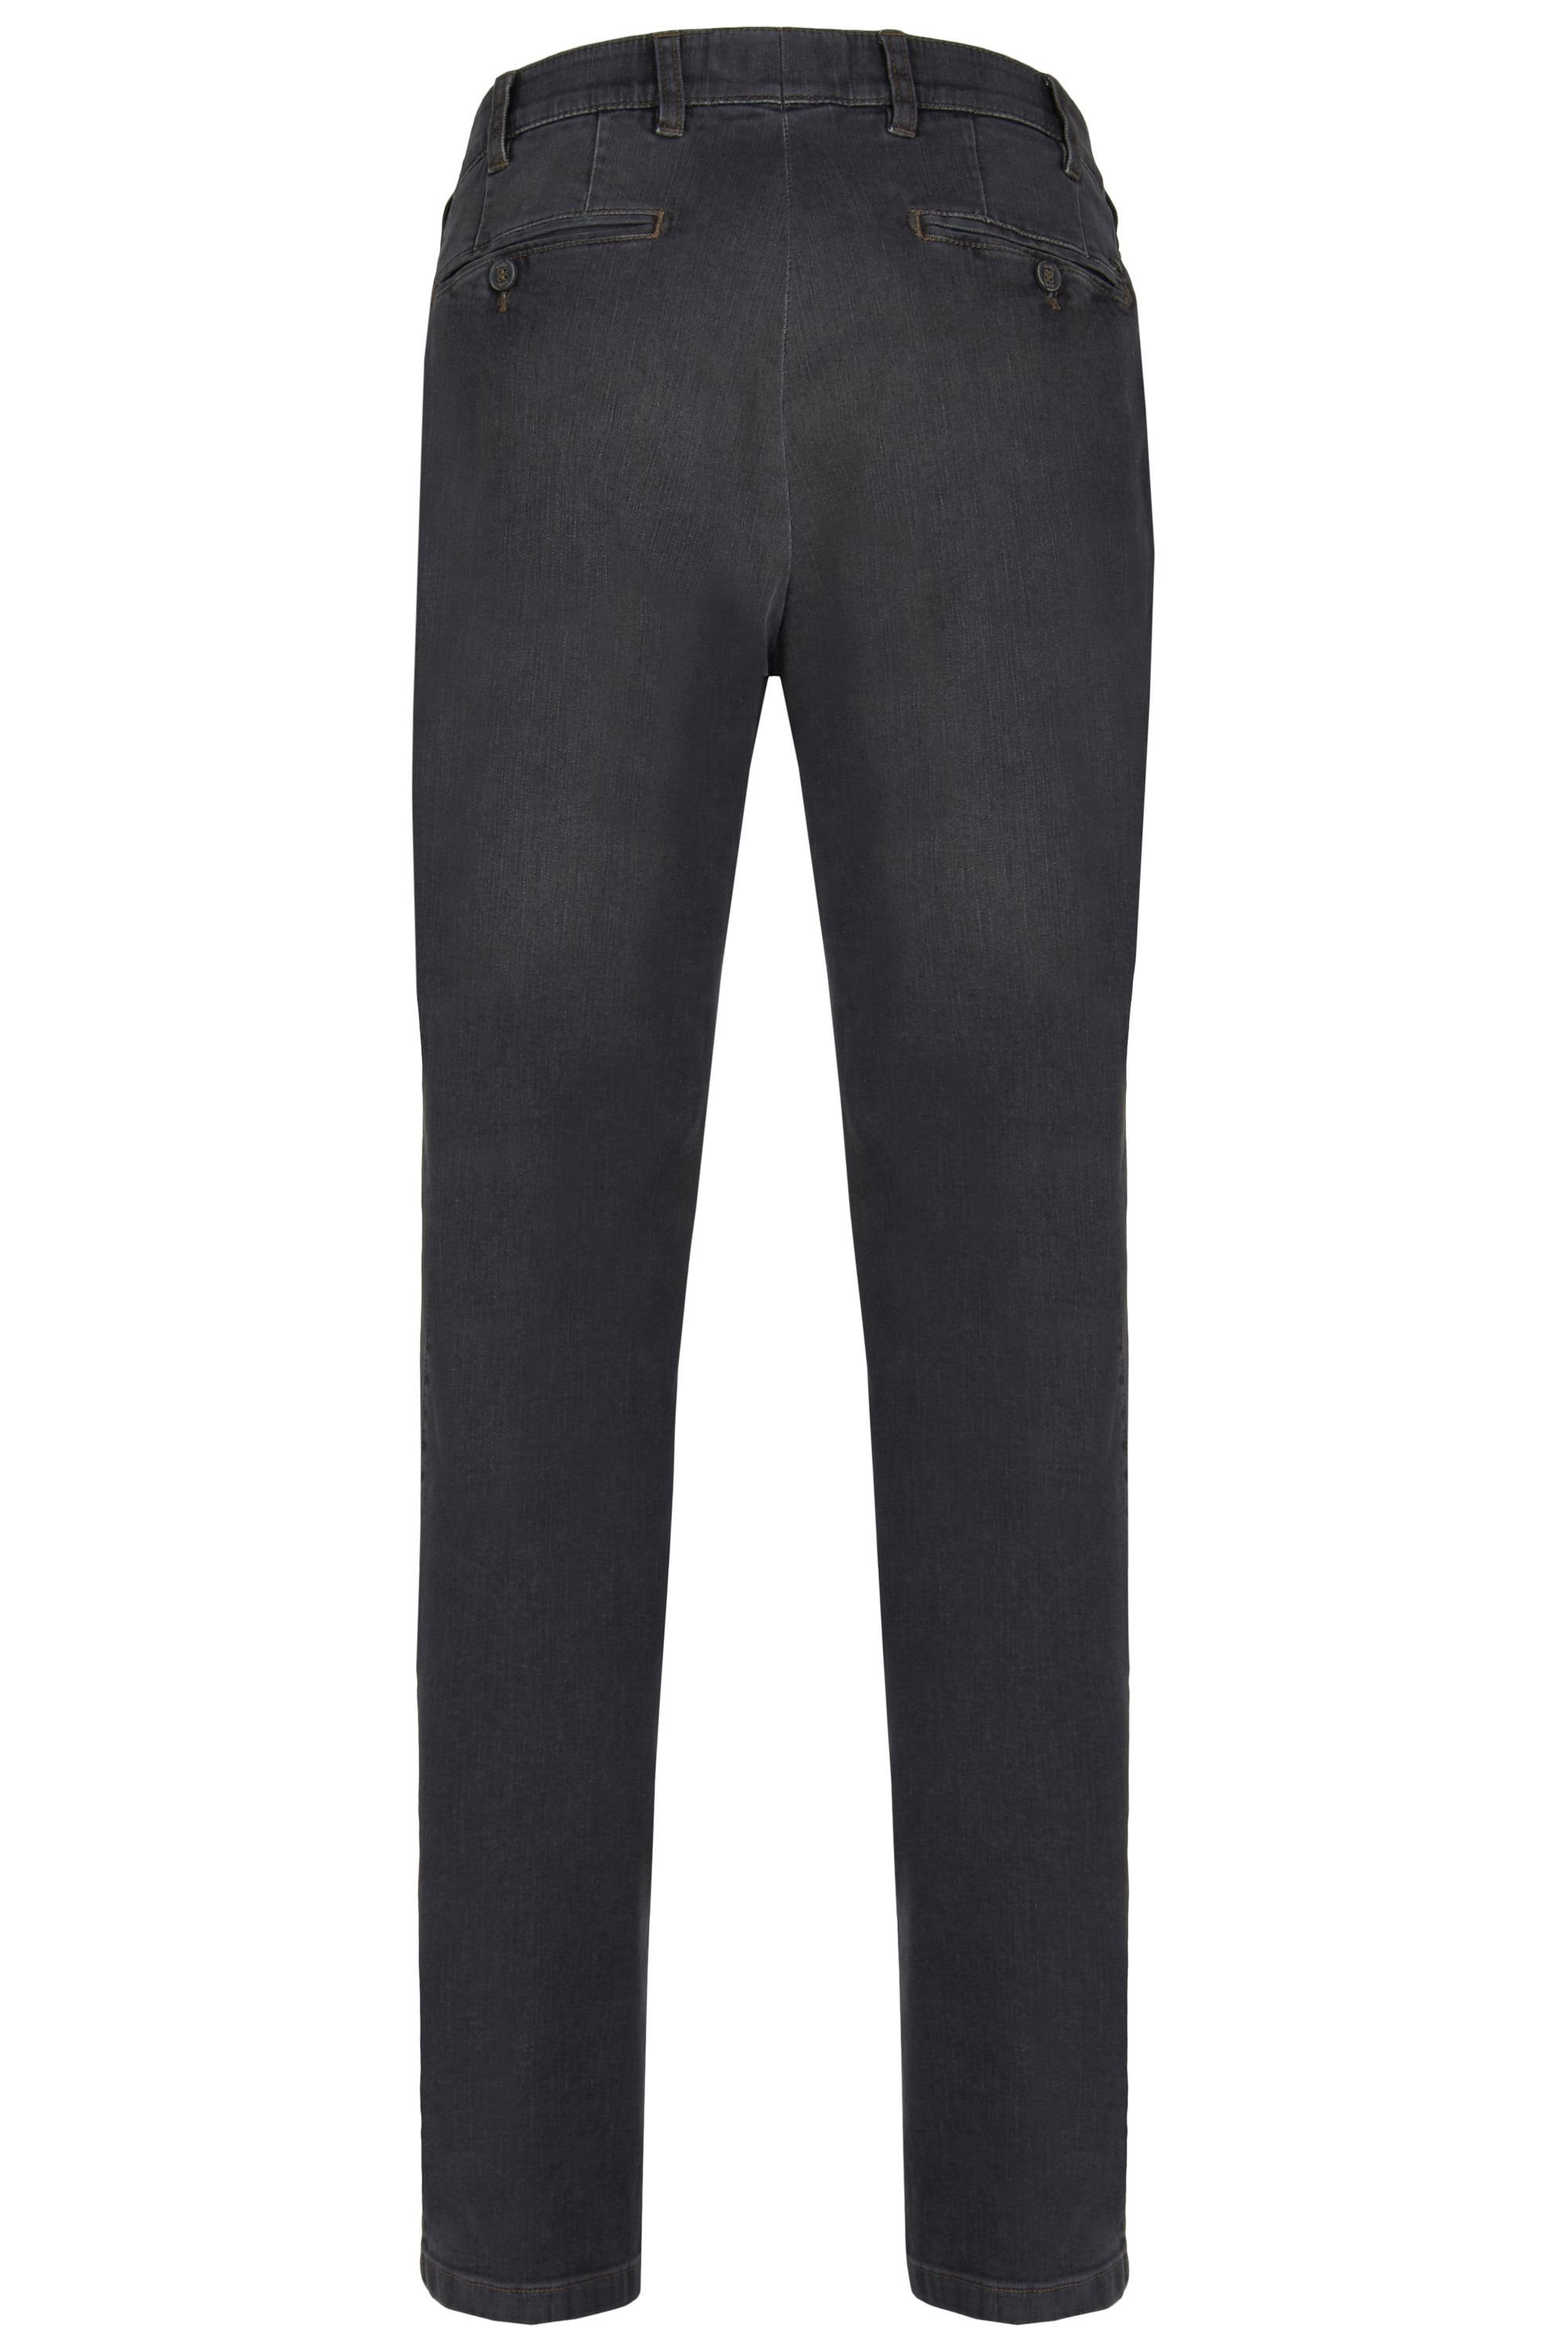 Flex Hose aus Baumwolle Herren 526 Jeans aubi: High Perfect soft used Modell (53) Fit aubi Stretch Bequeme Jeans grey